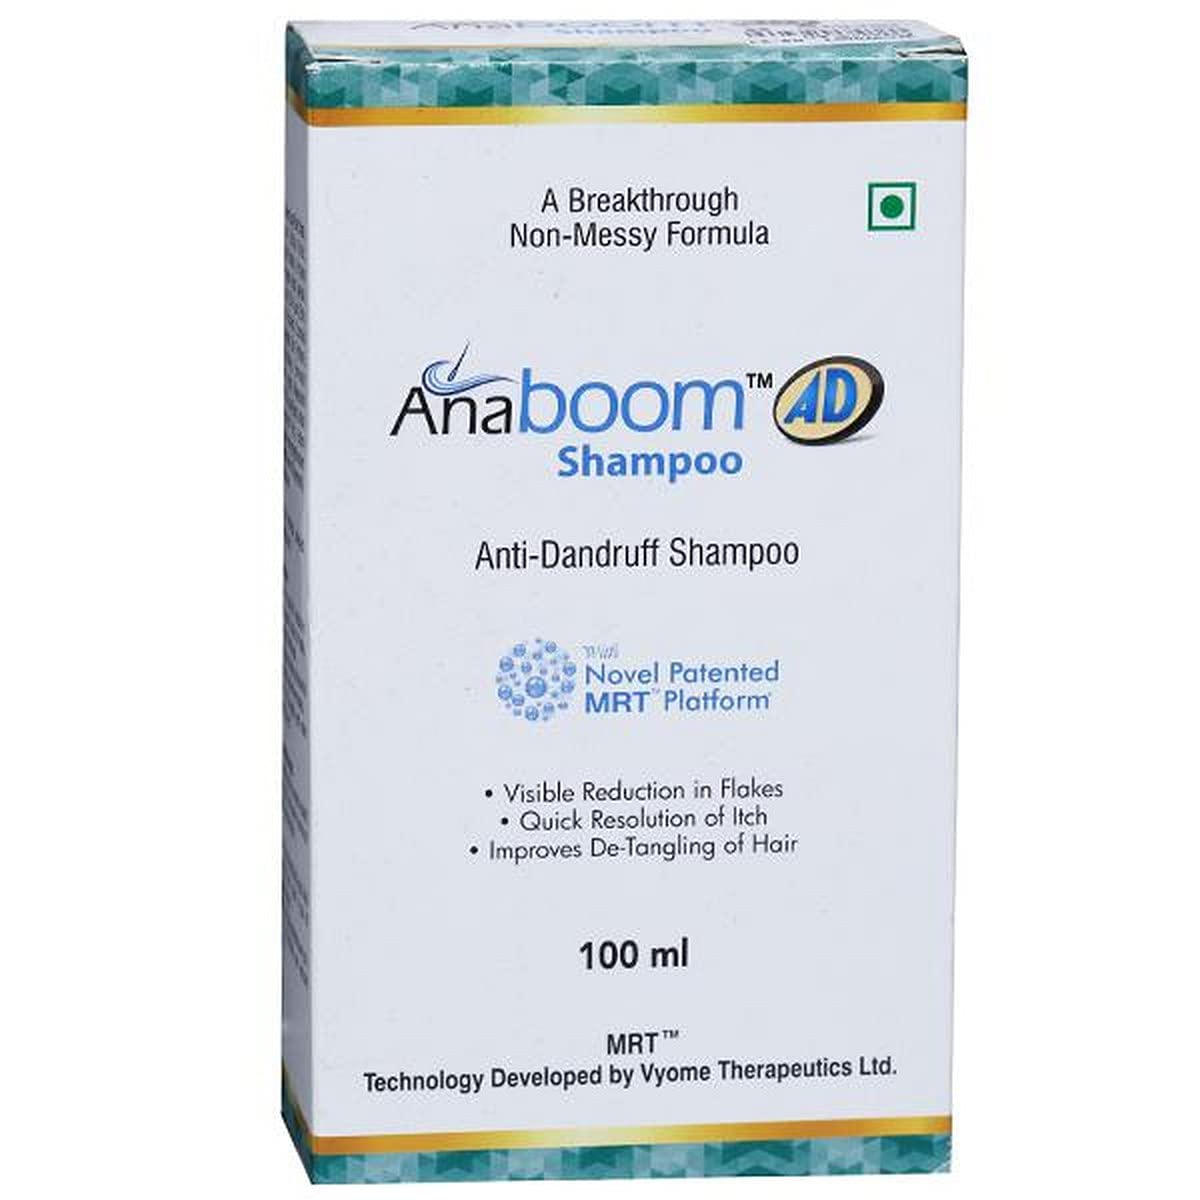 Anaboom AD Shampoo